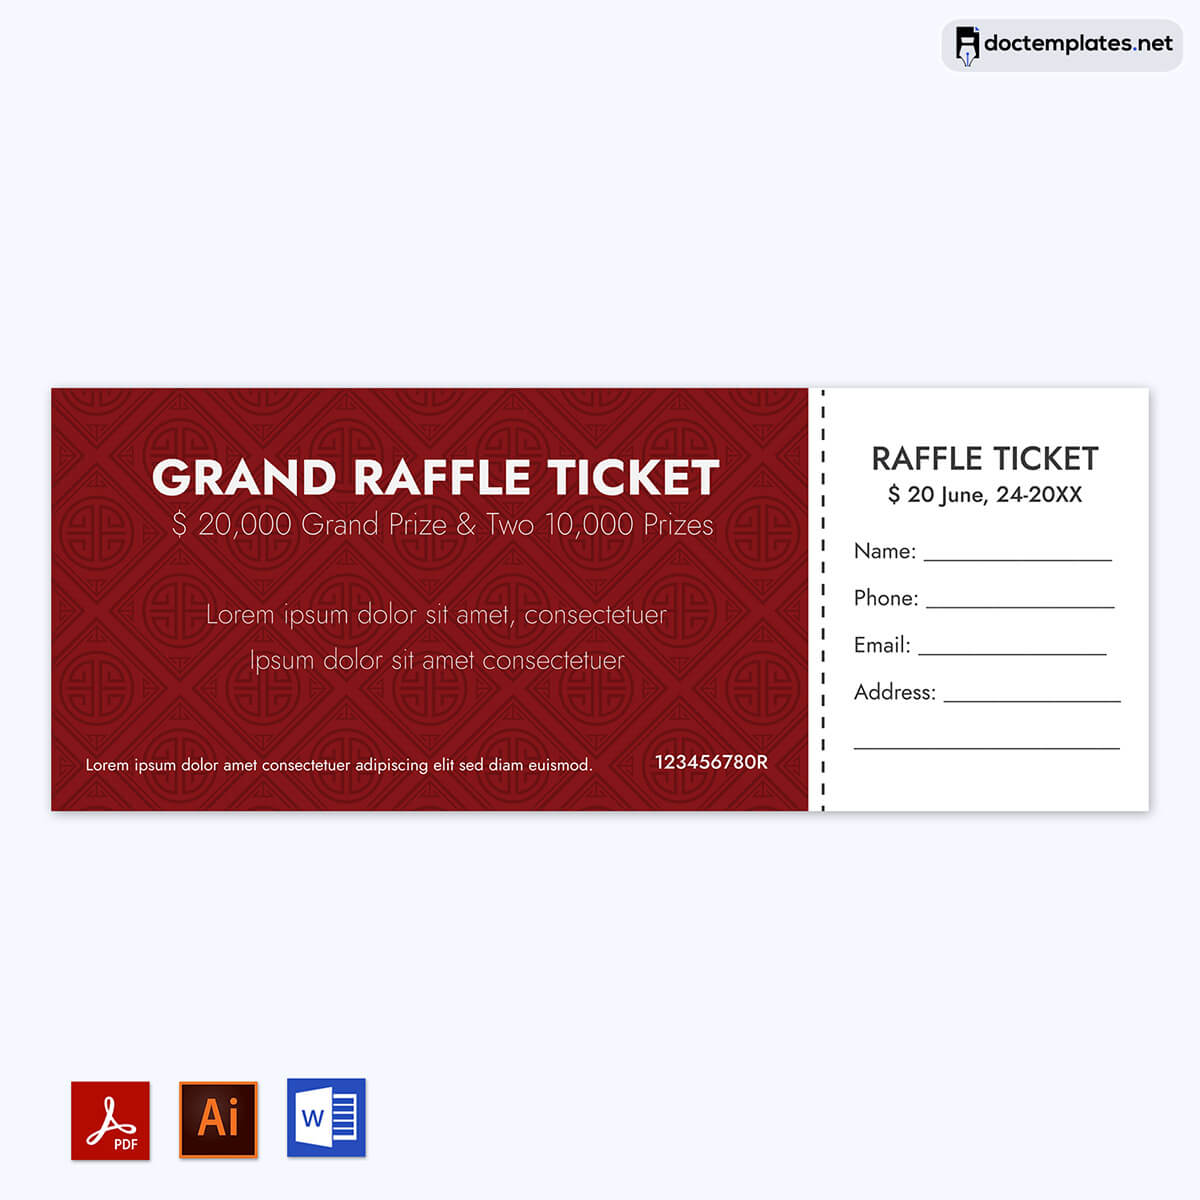 Image of Printable raffle ticket template
Printable raffle ticket template
